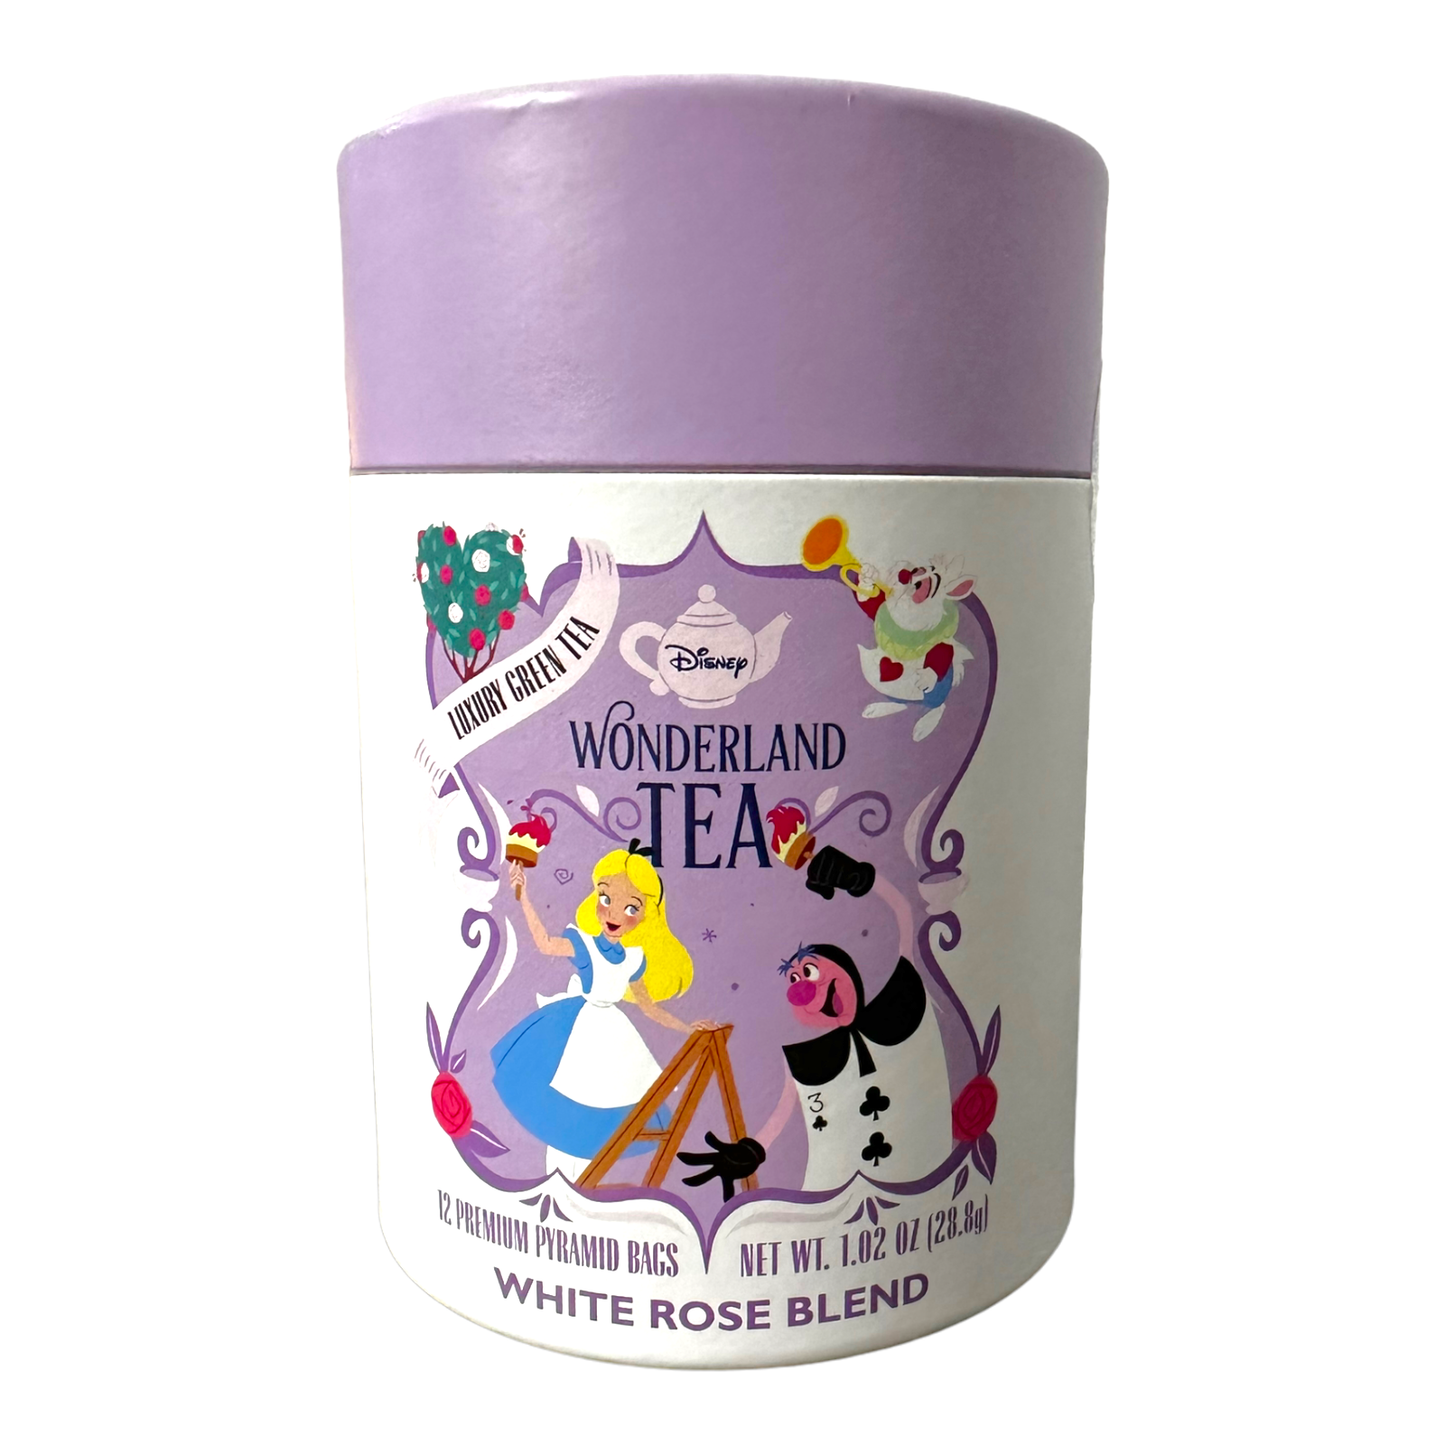 White Rose Blend Disney Wonderland Tea Pyramid Bags - 12 Count